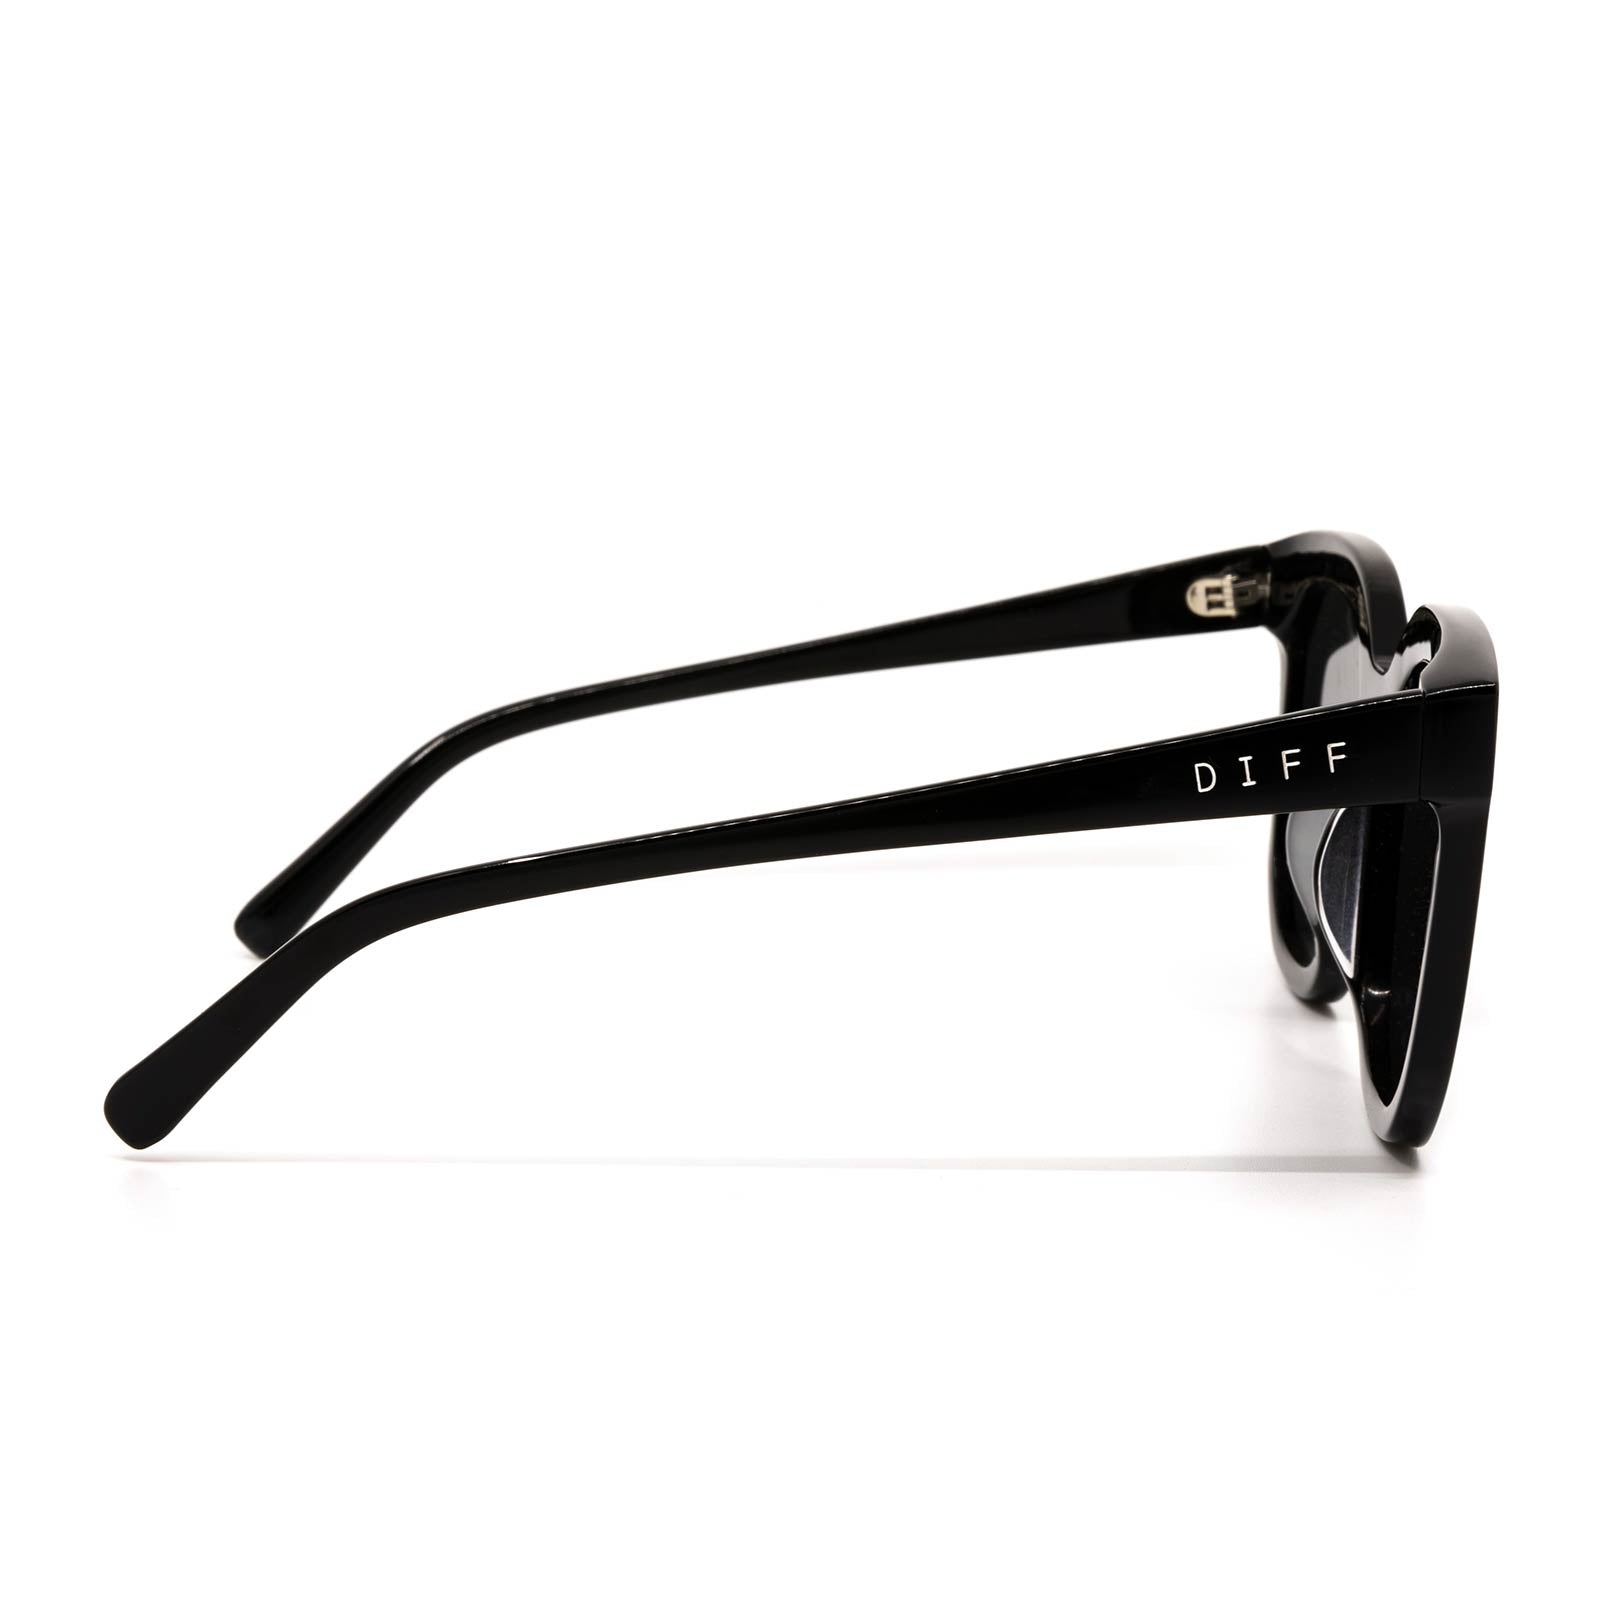 A black pair of DIFF sunglasses.